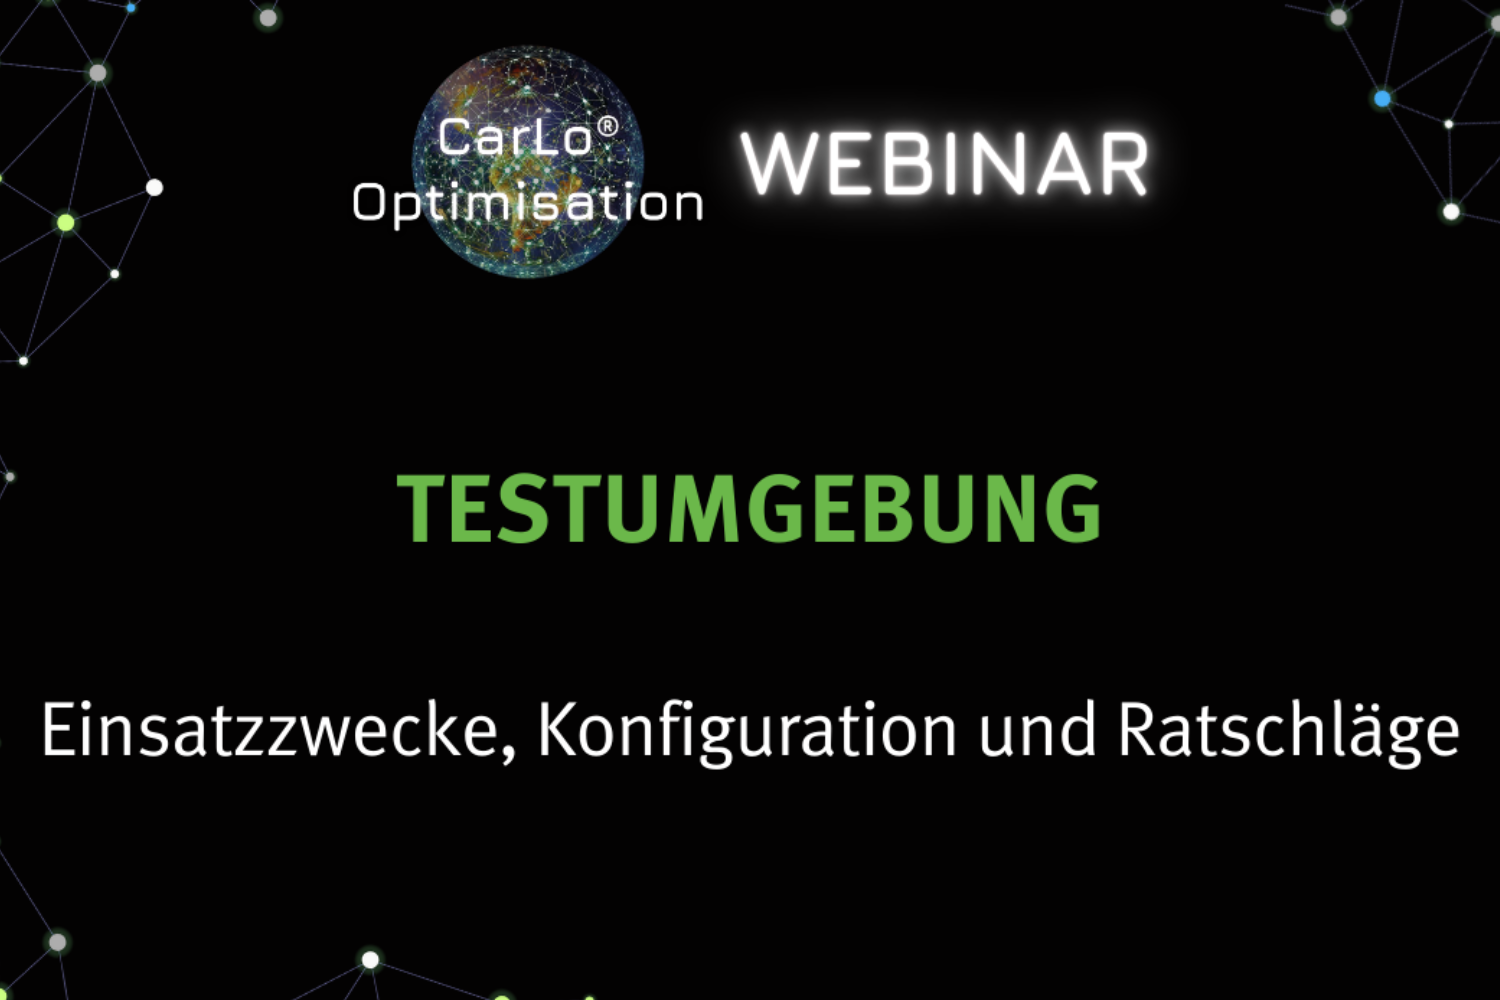 CarLo Optimisation Webinar: CarLo Testumgebung